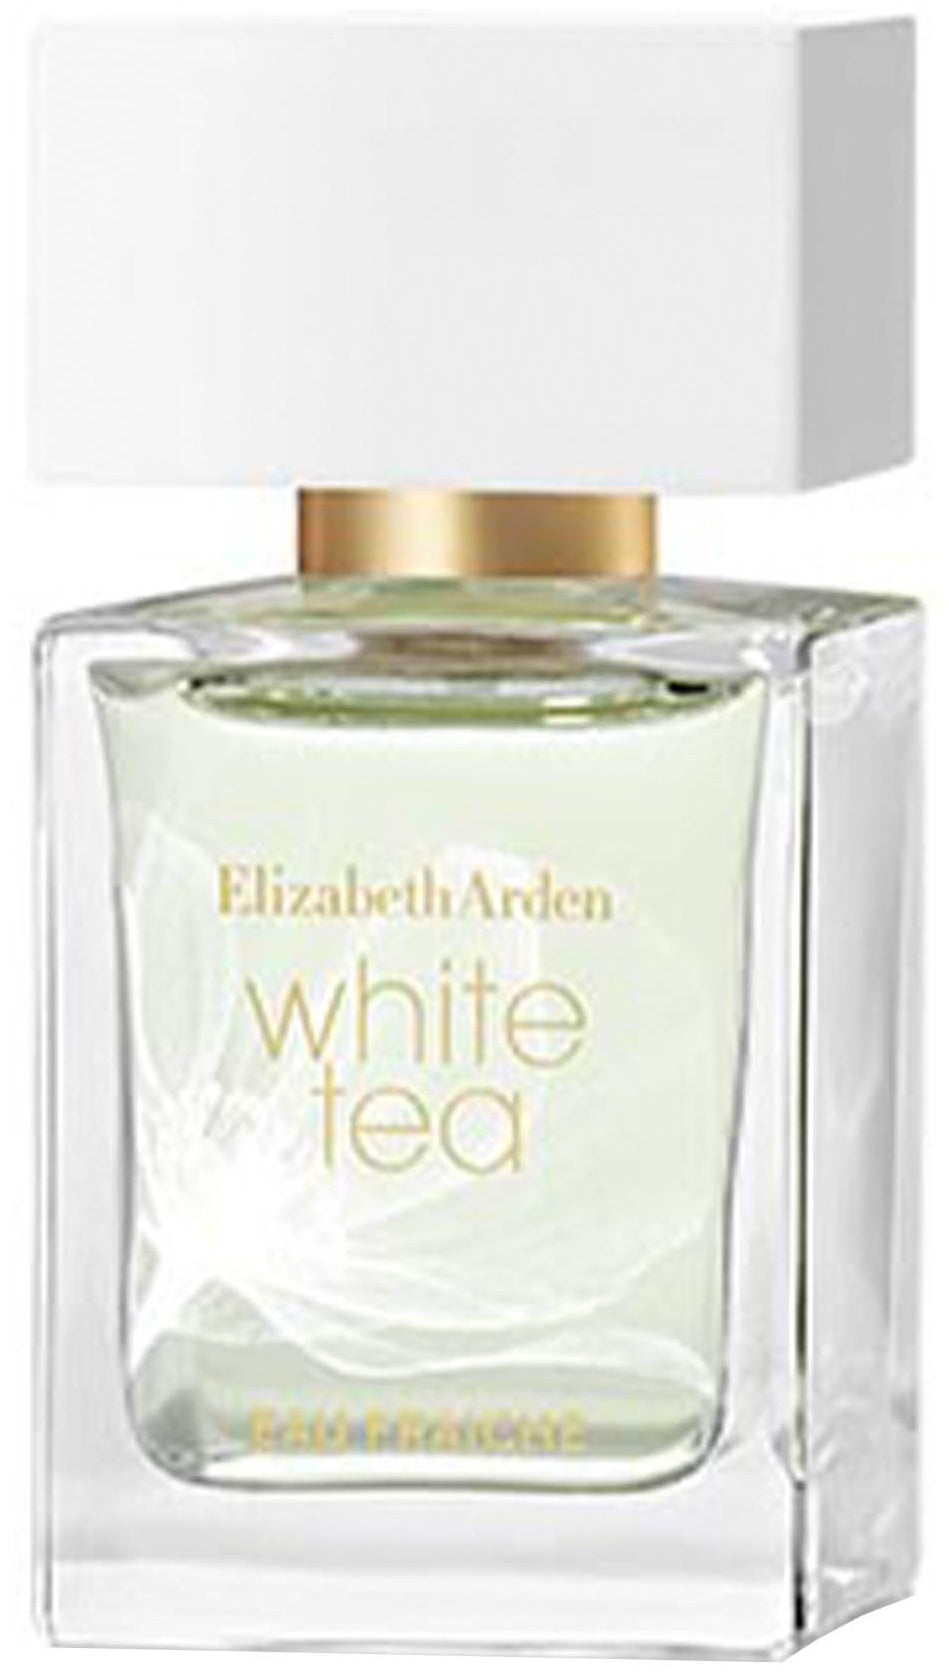 Elizabeth Arden White Tea Eau Fraiche Eau de Toilette 30ml Spray - Peacock Bazaar